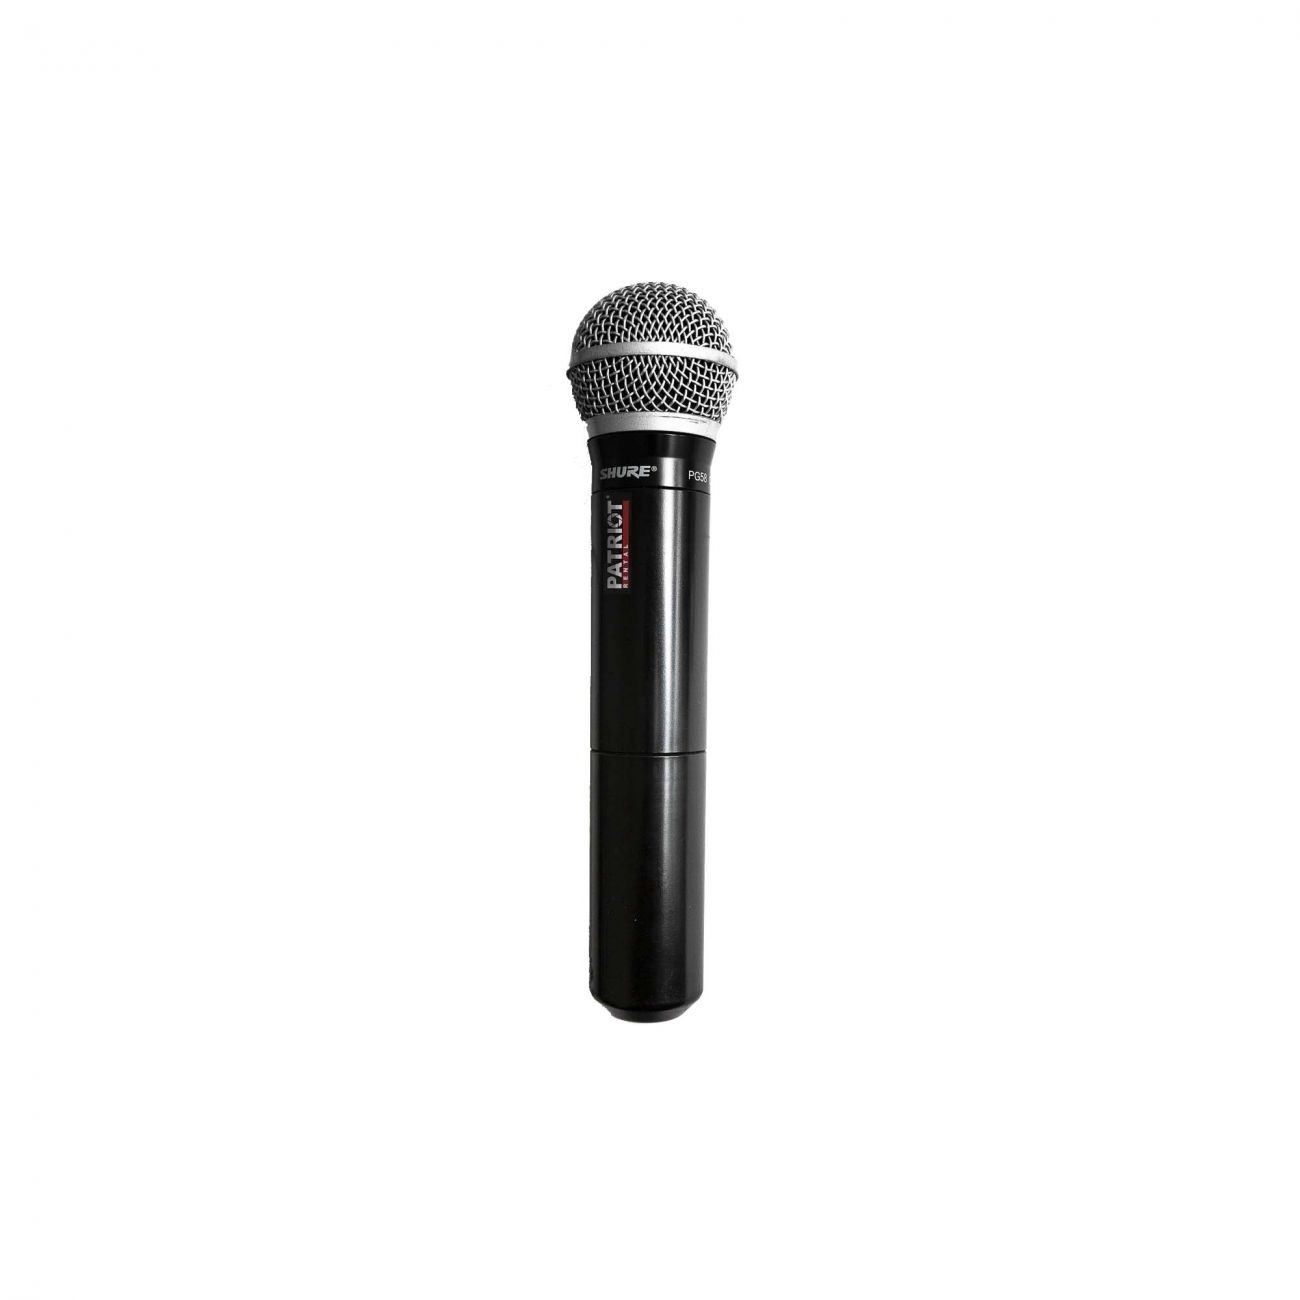 Microphone additional + splitter